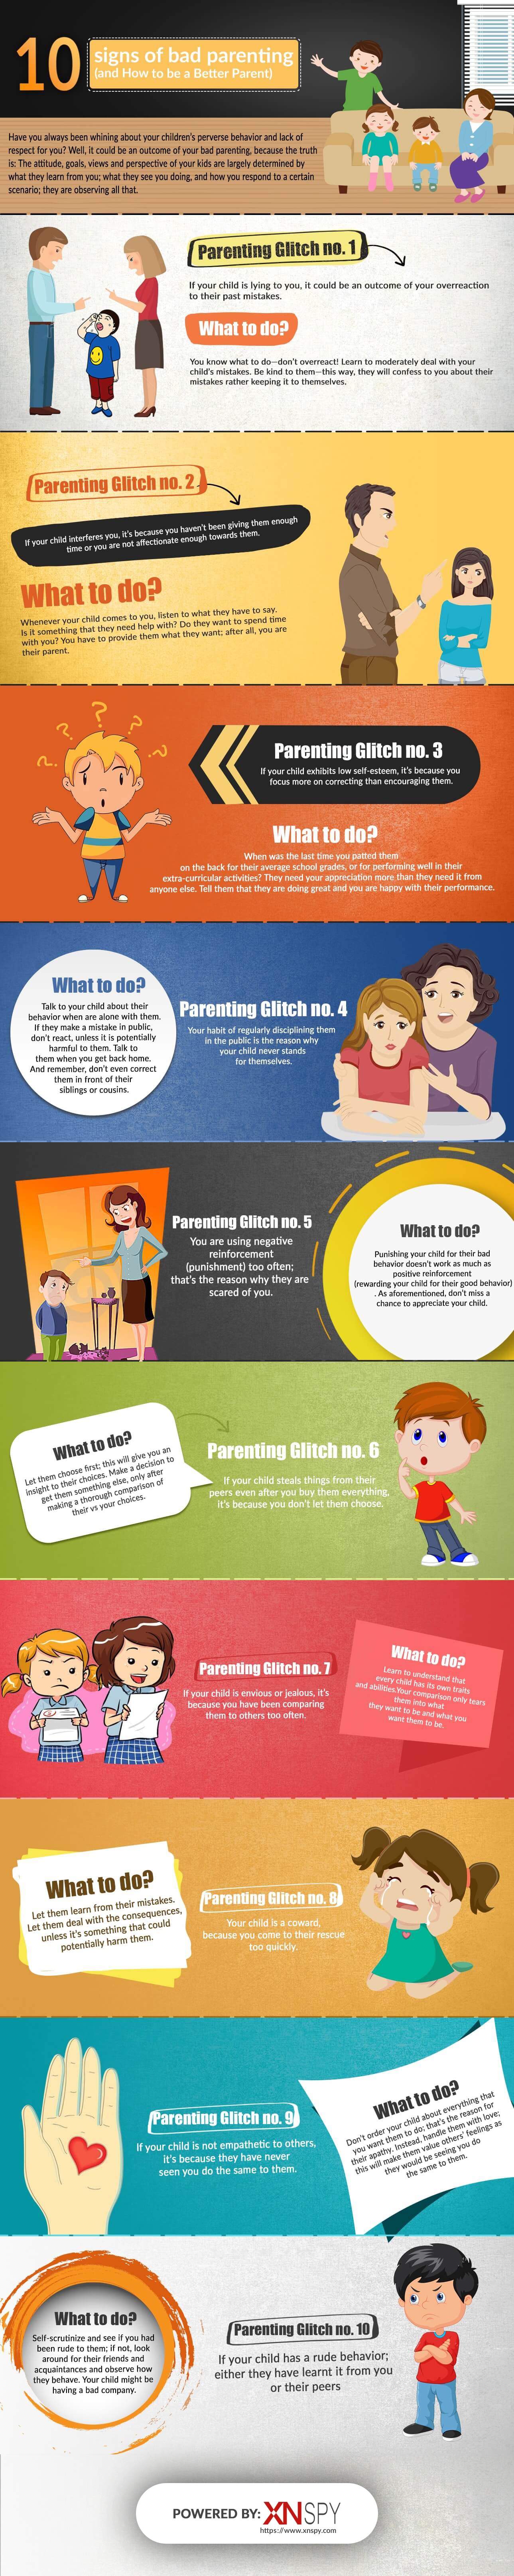 Middle Class Dad bad parenting infographic bad parenting statistics